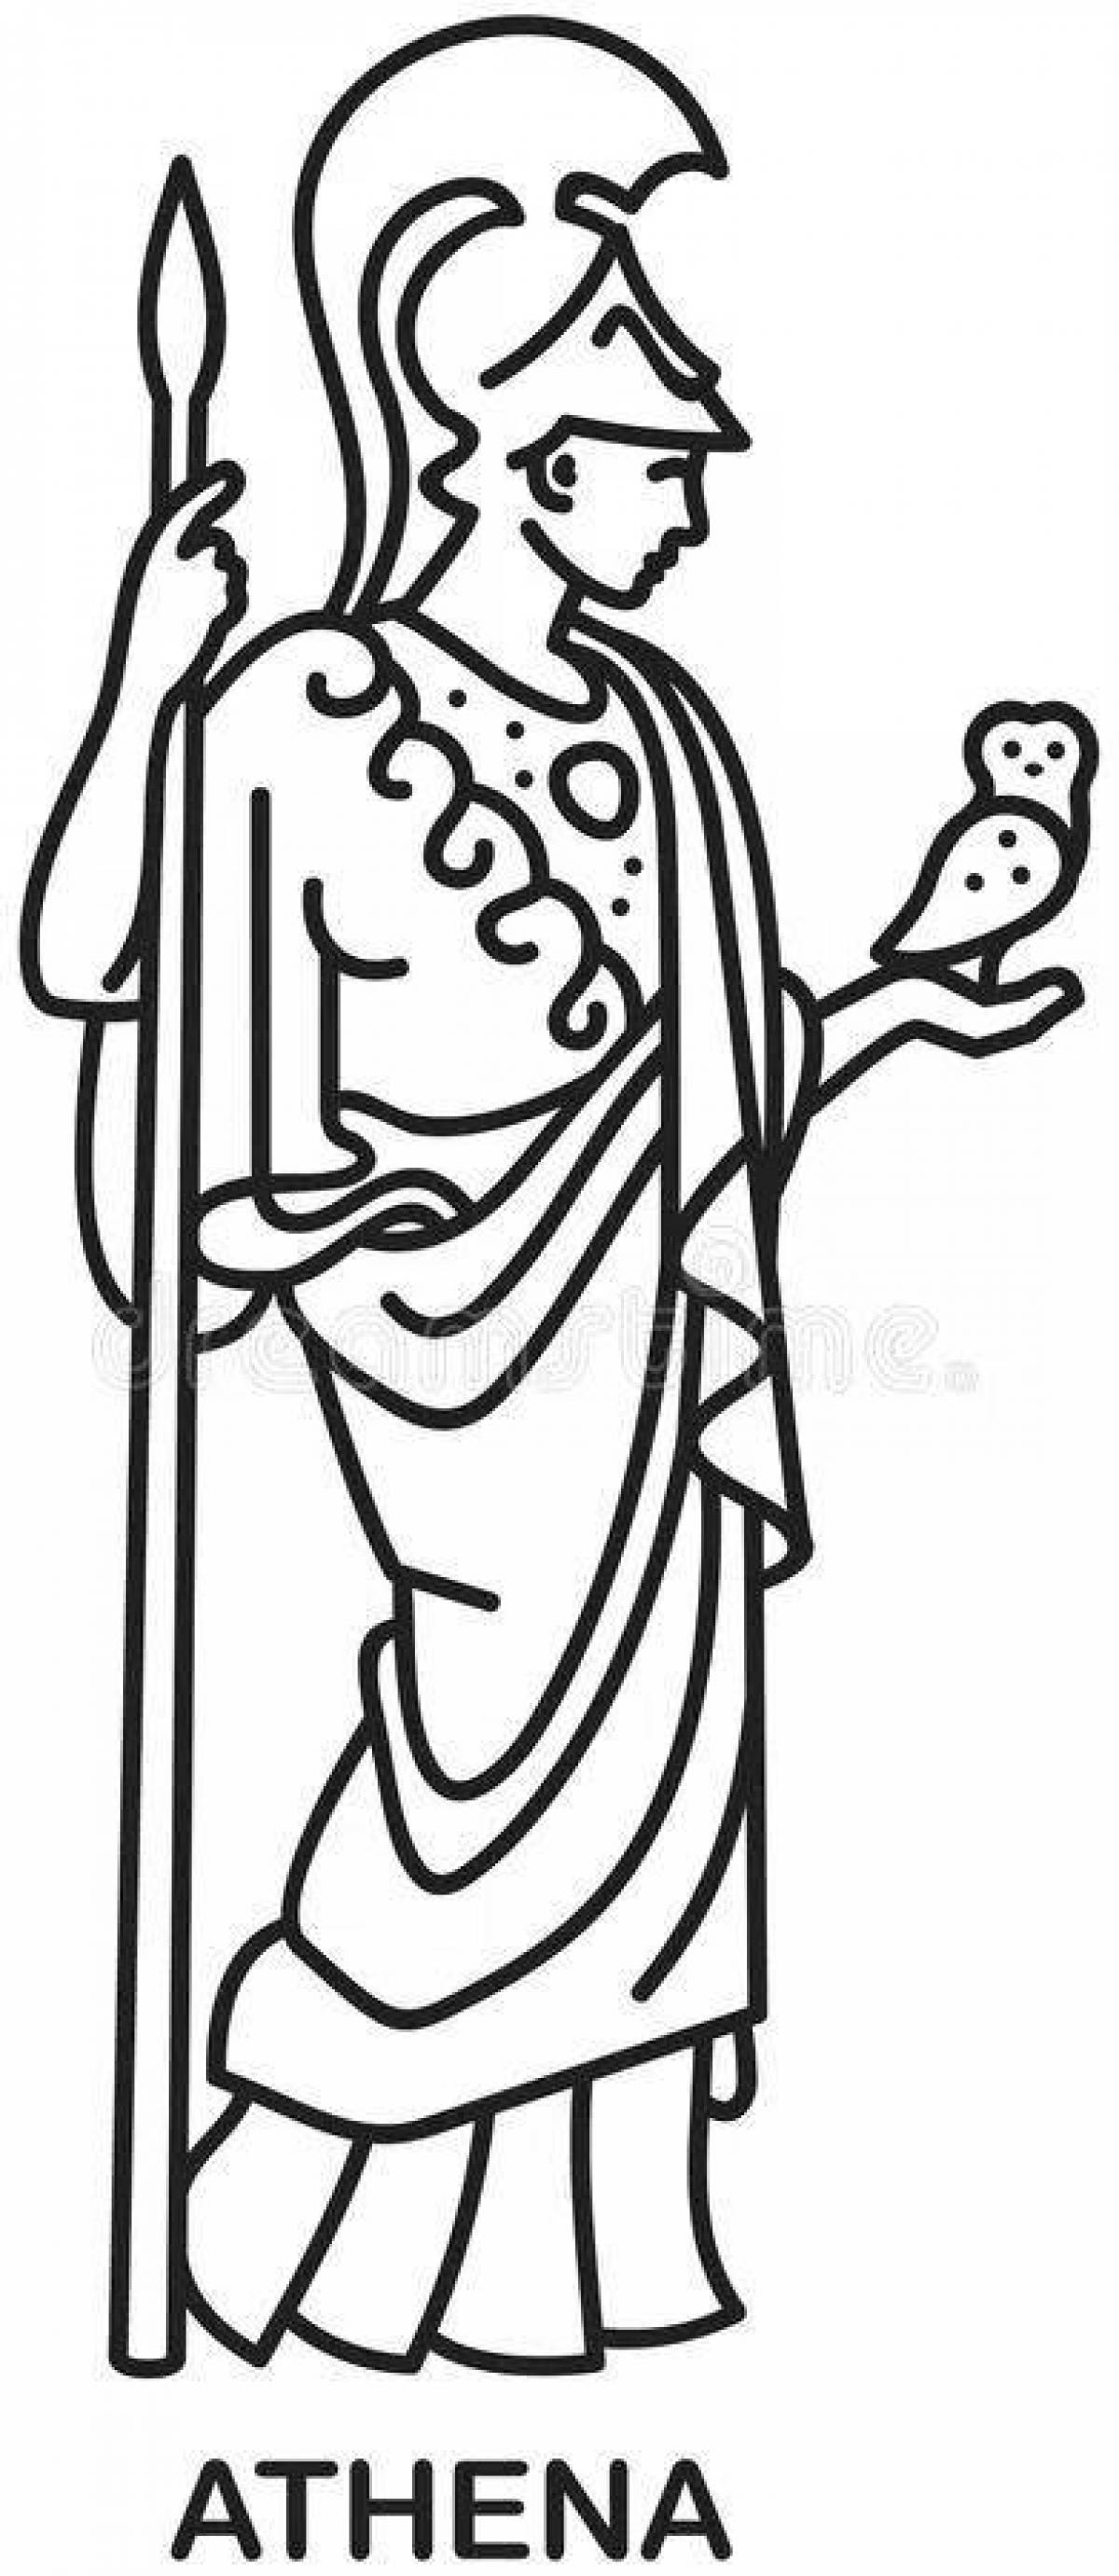 Impressive goddess athena coloring page